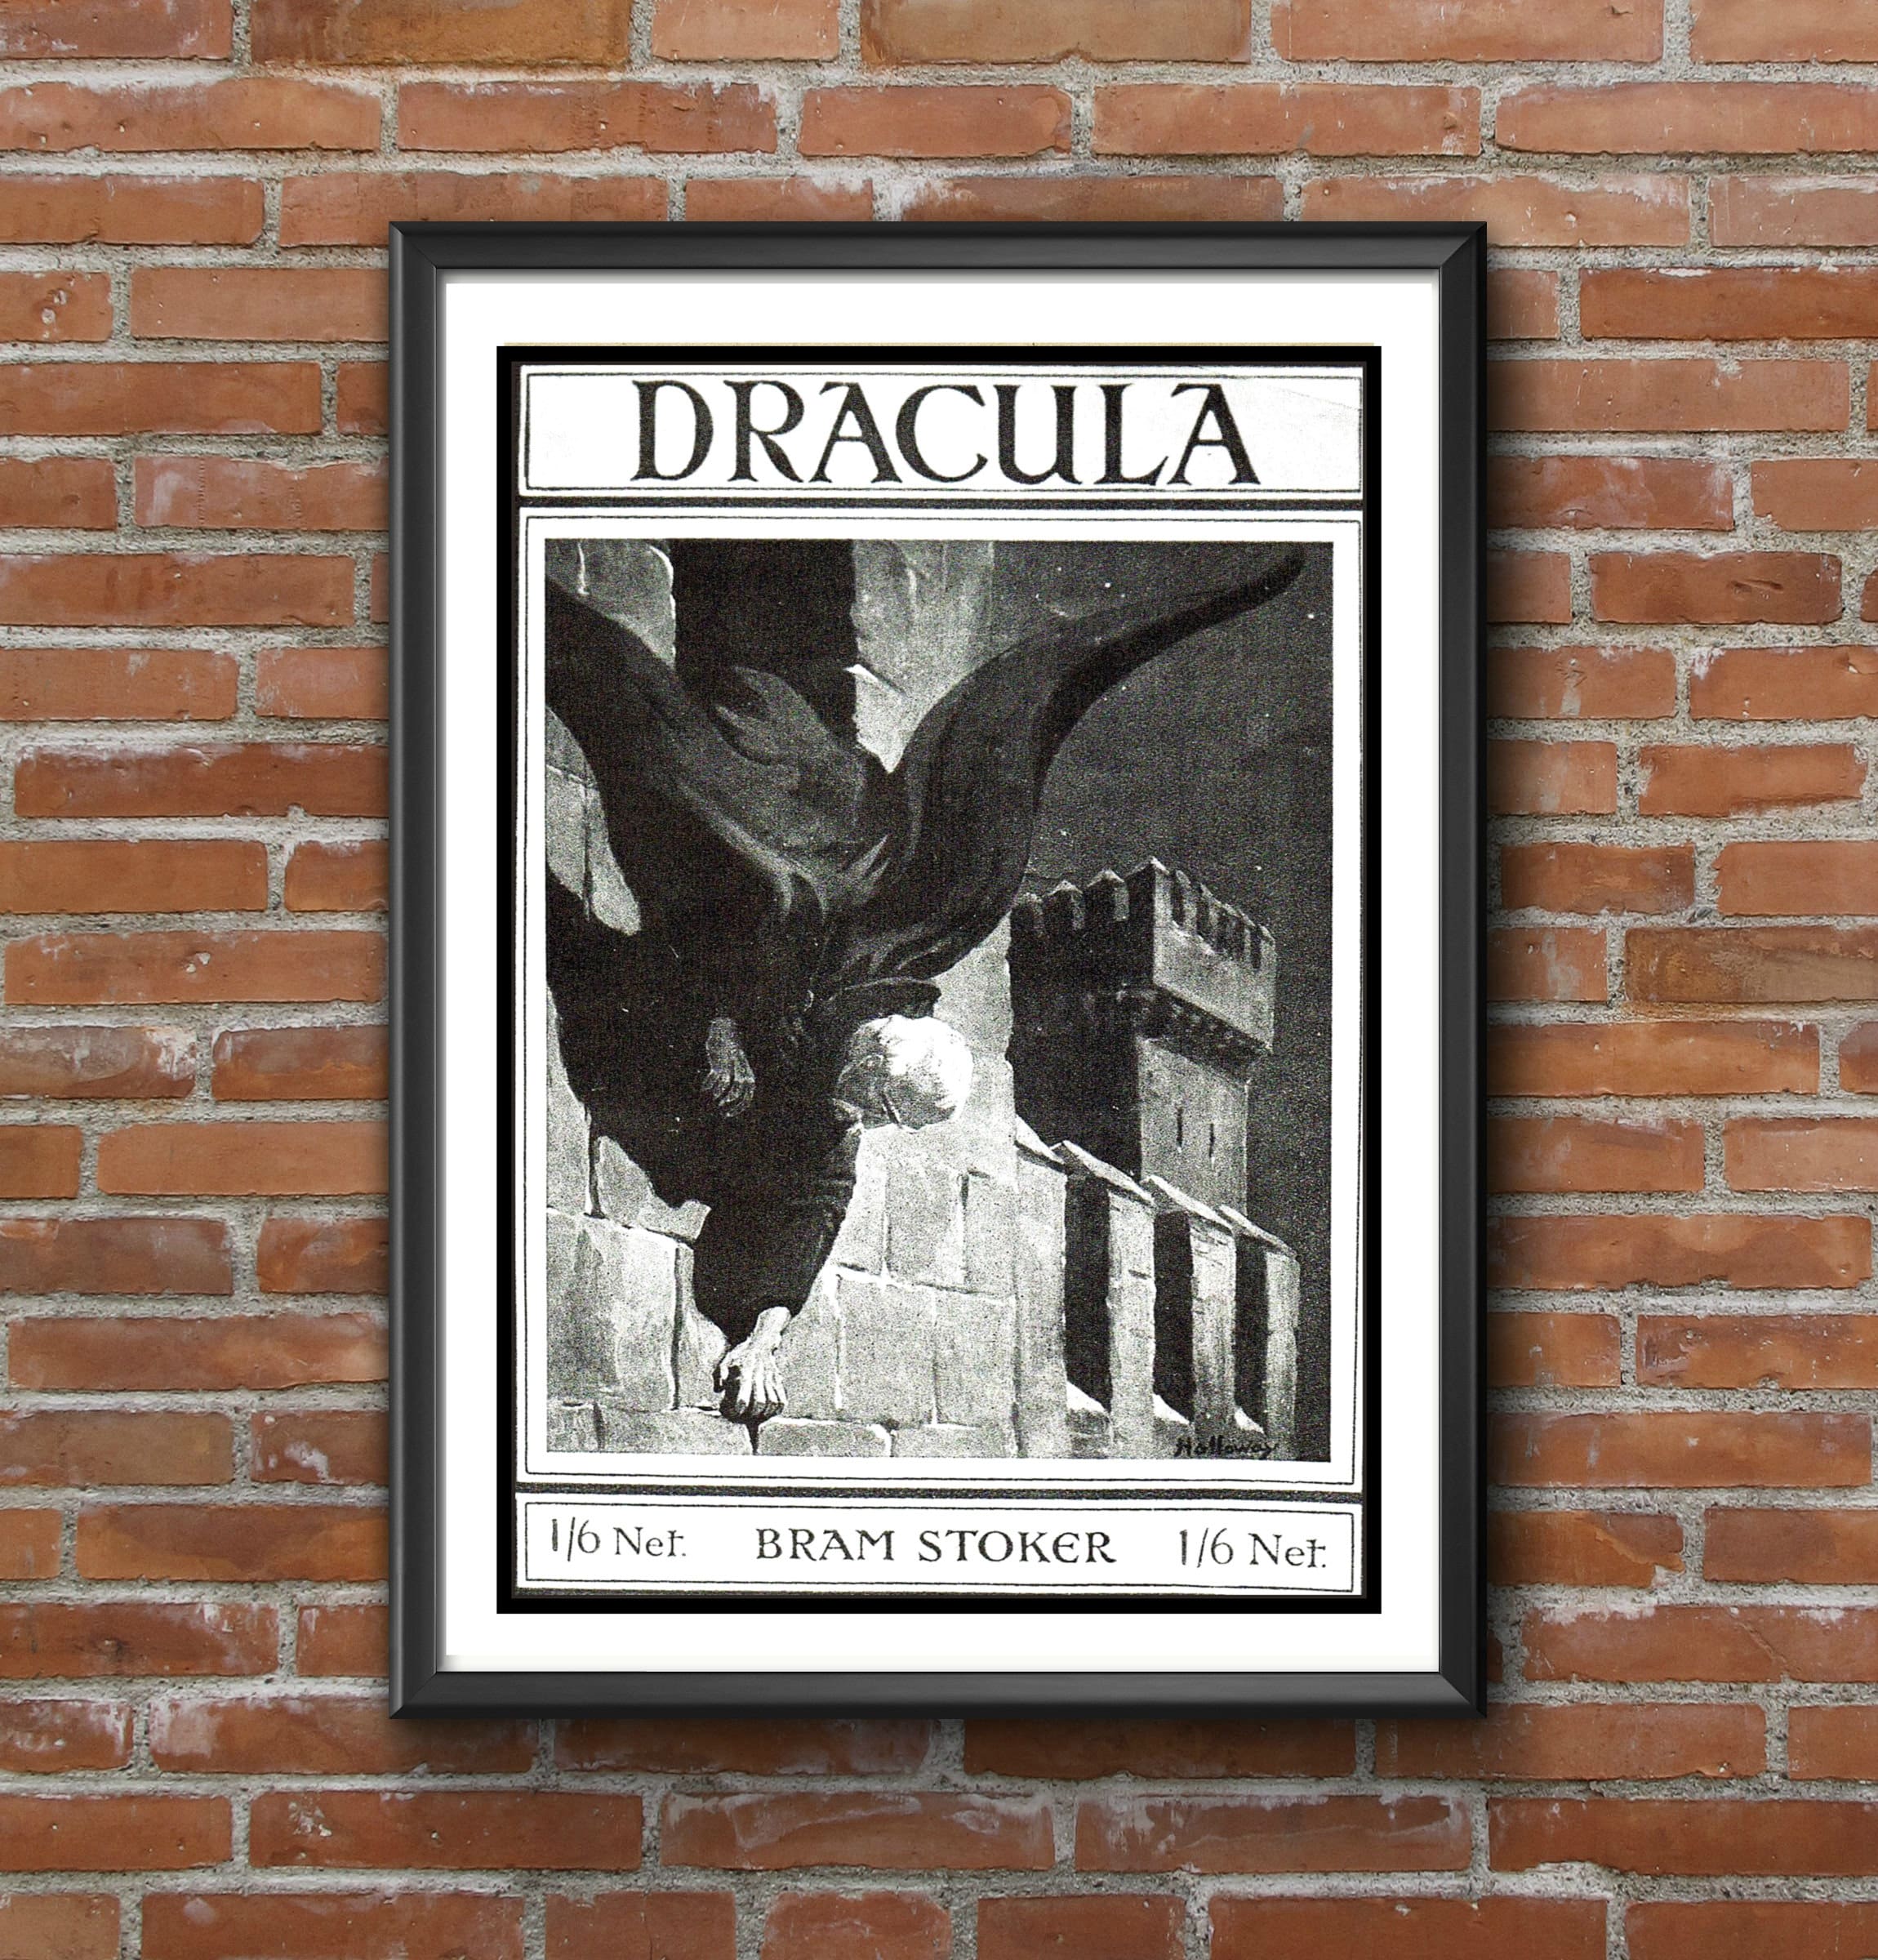 Discover Dracula Book Illustration 1897 , Bram Stoker, Art Print, Poster, Vintage Book Cover, Wall Art, Print, Book Lover, Literary Gift, No Frame